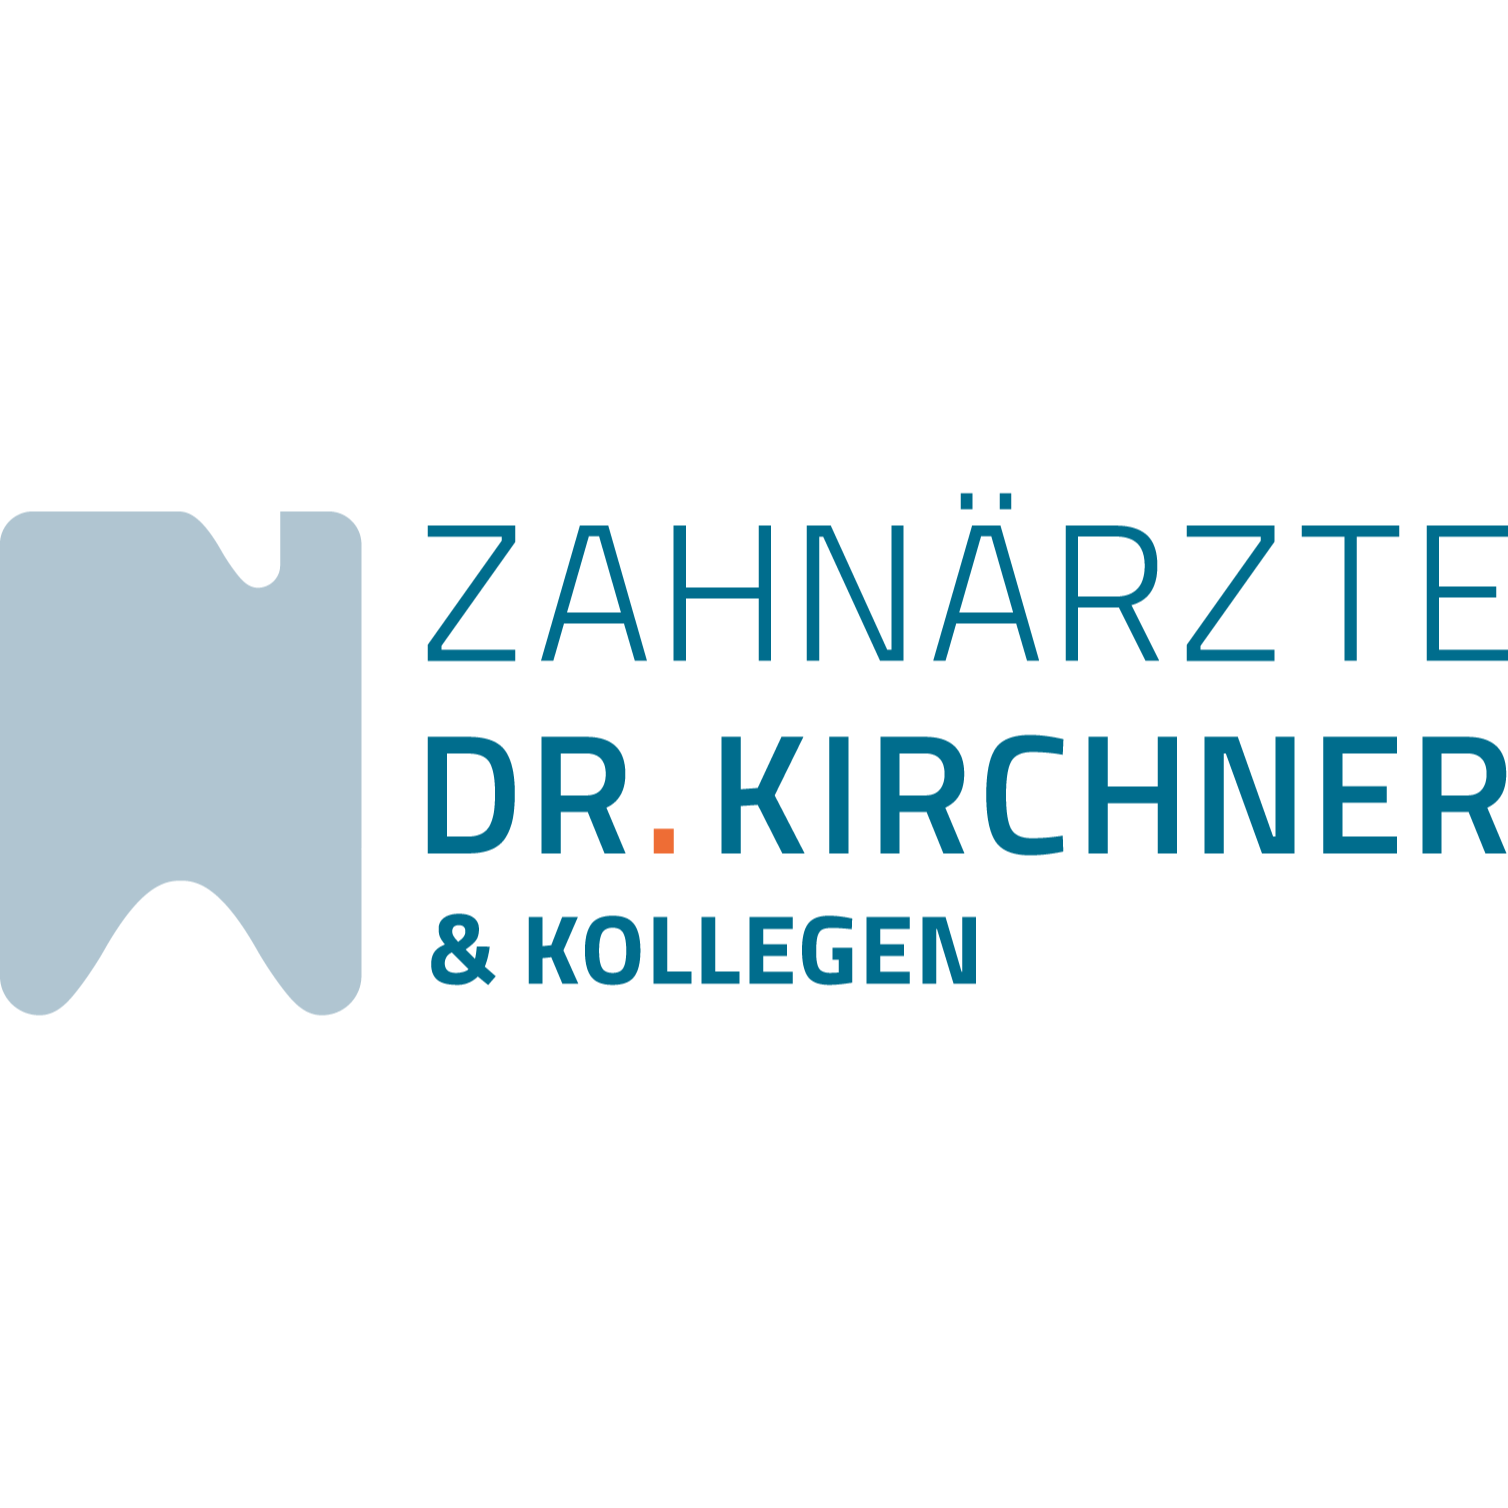 Zahnärzte Dr. Kirchner & Kollegen in Köln - Logo